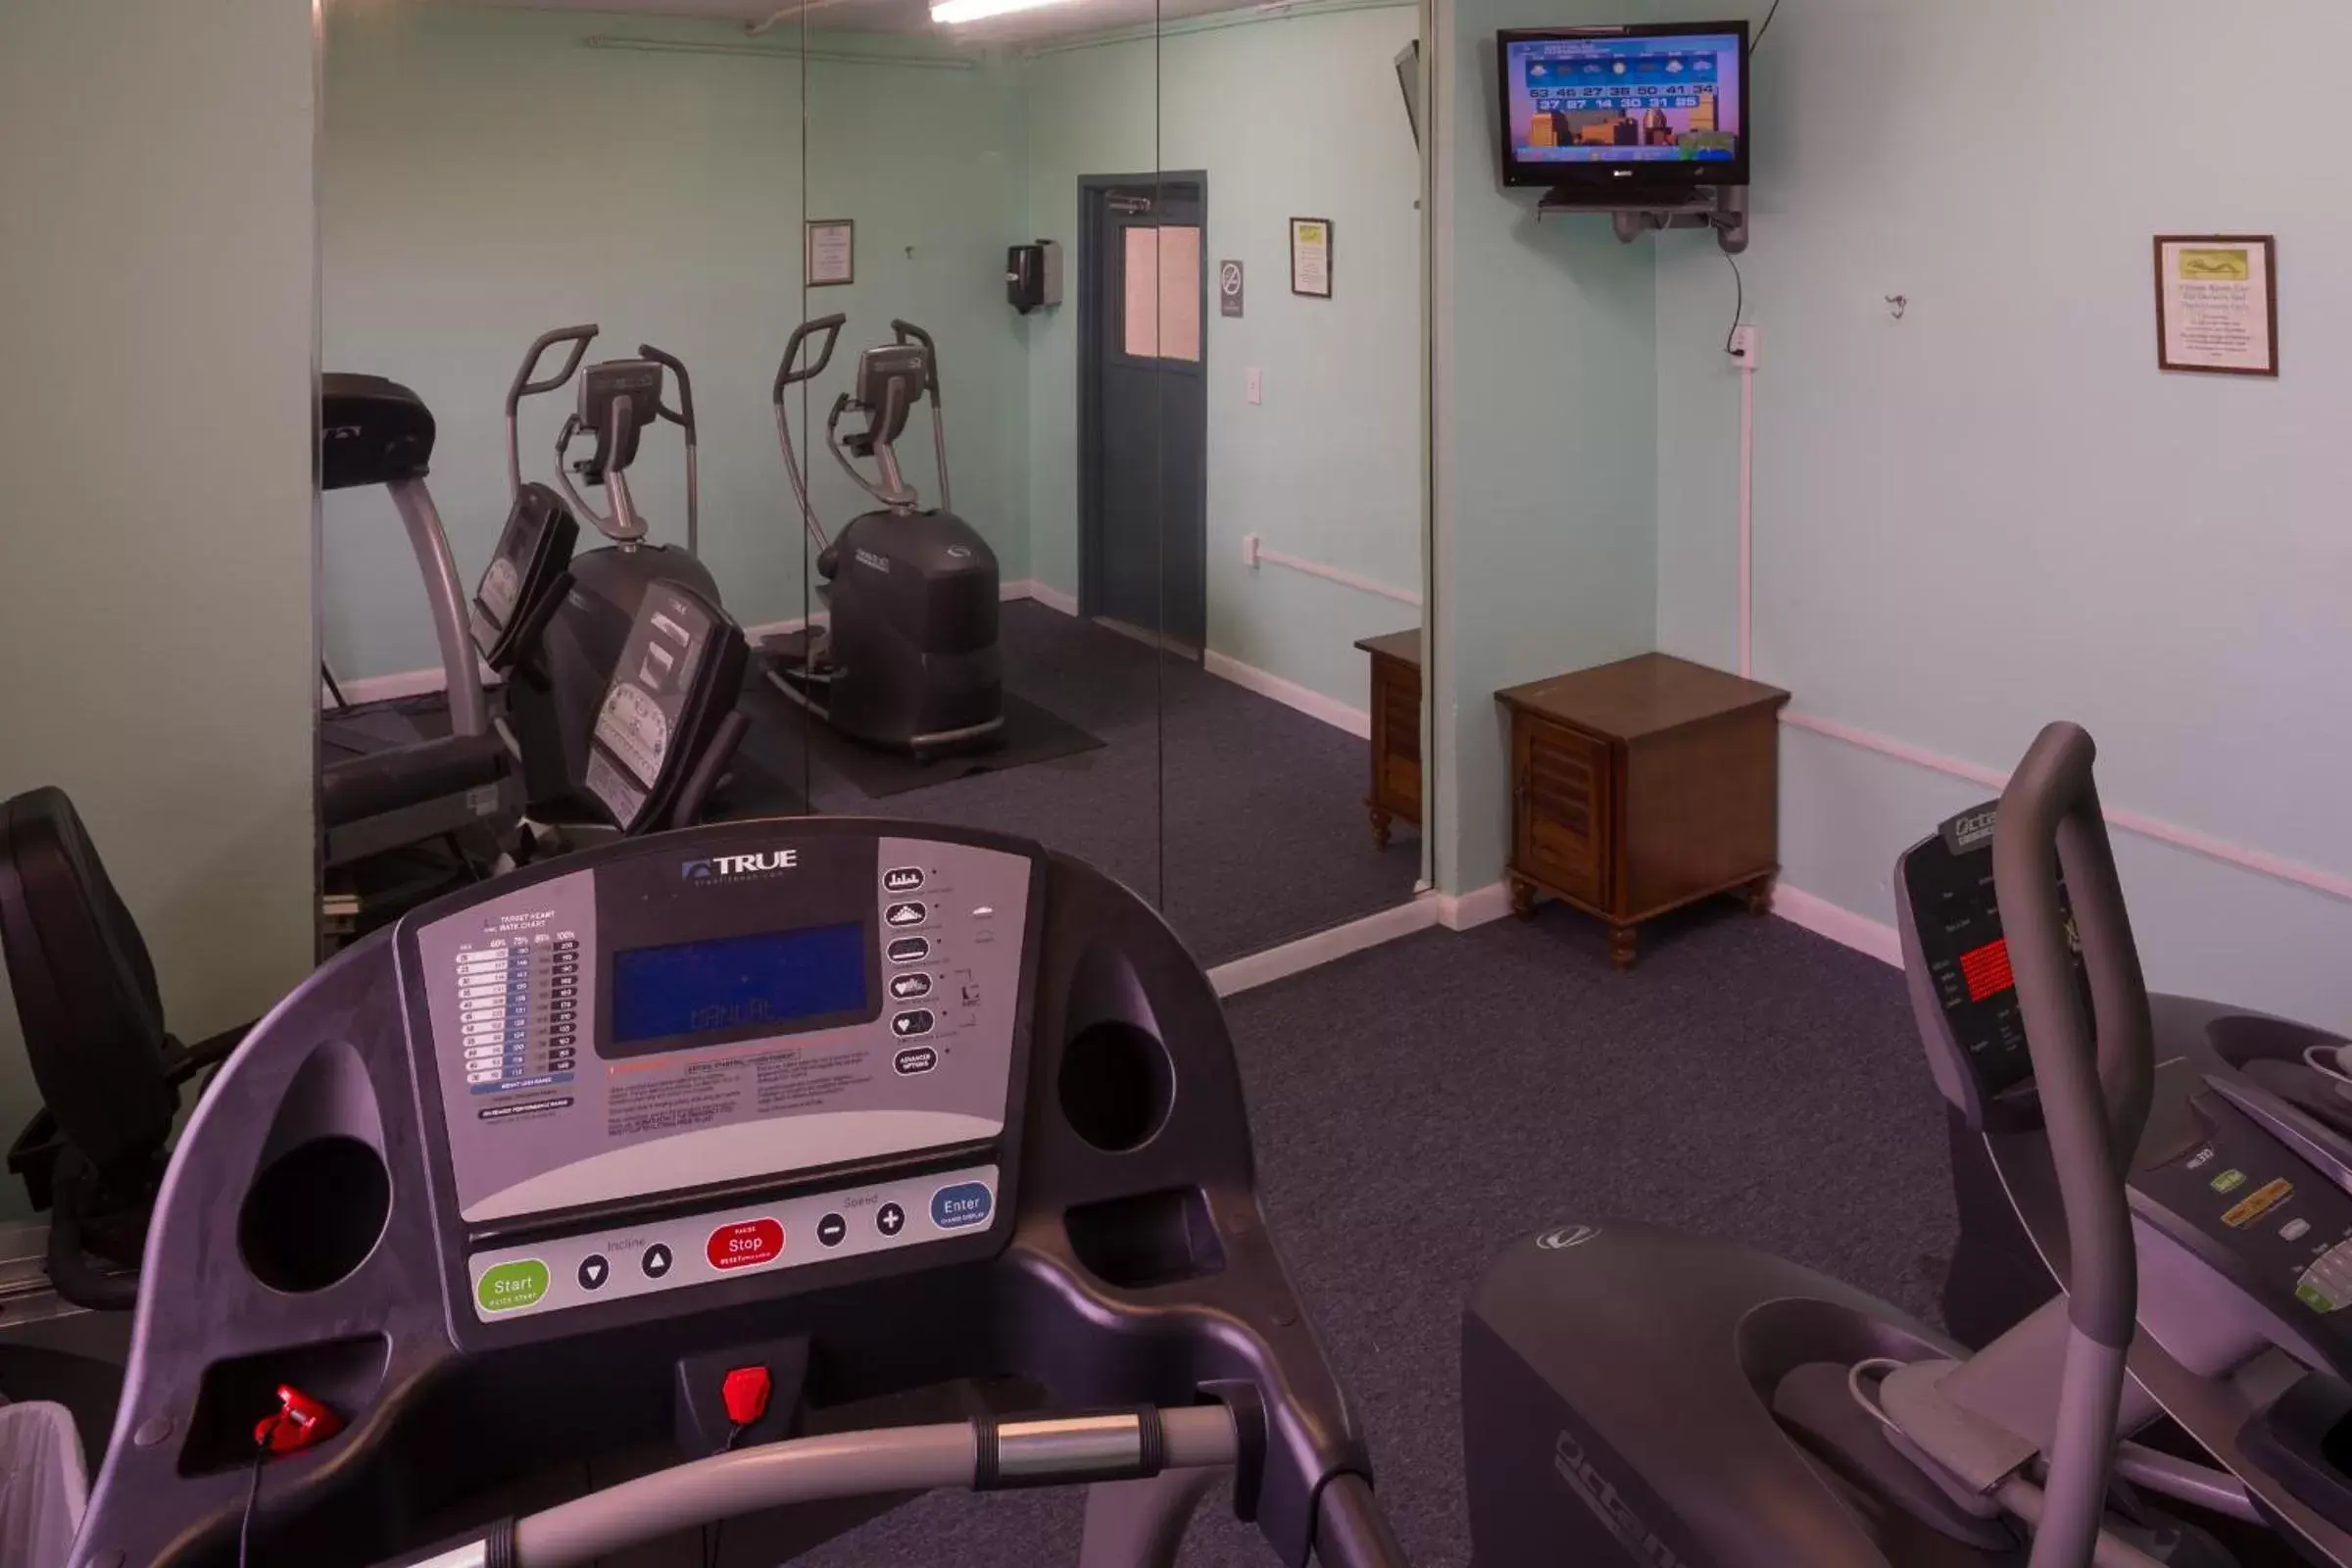 Fitness centre/facilities, Fitness Center/Facilities in Palm Beach Resort Orange Beach a Ramada by Wyndham